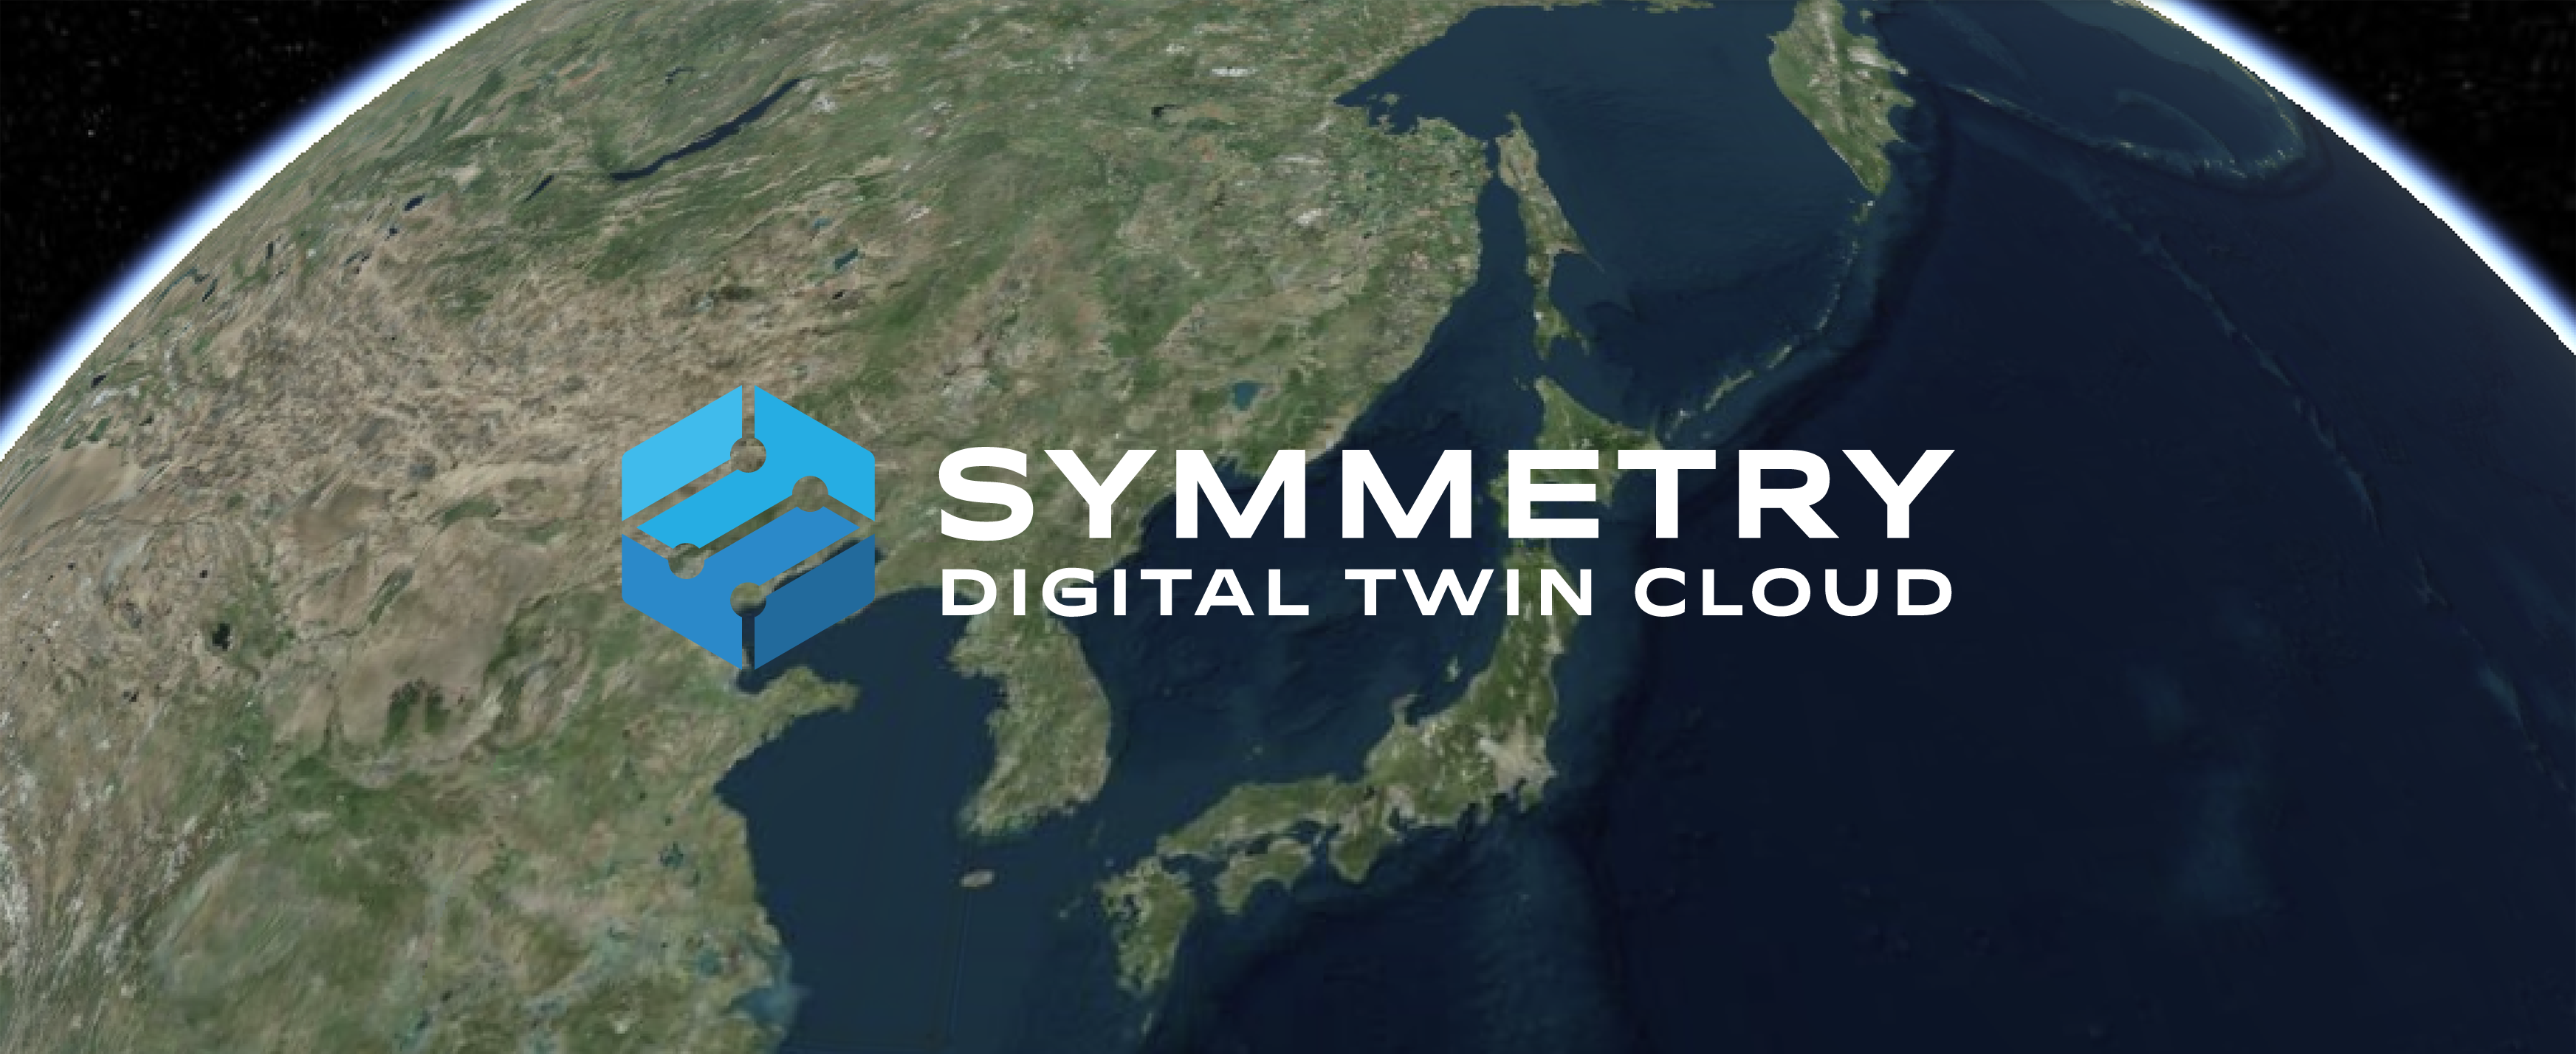 【SYMMETRY Digital Twin Cloud】様々なお客様からの非常に多くのお問合せおよび導入要望をいただいています。